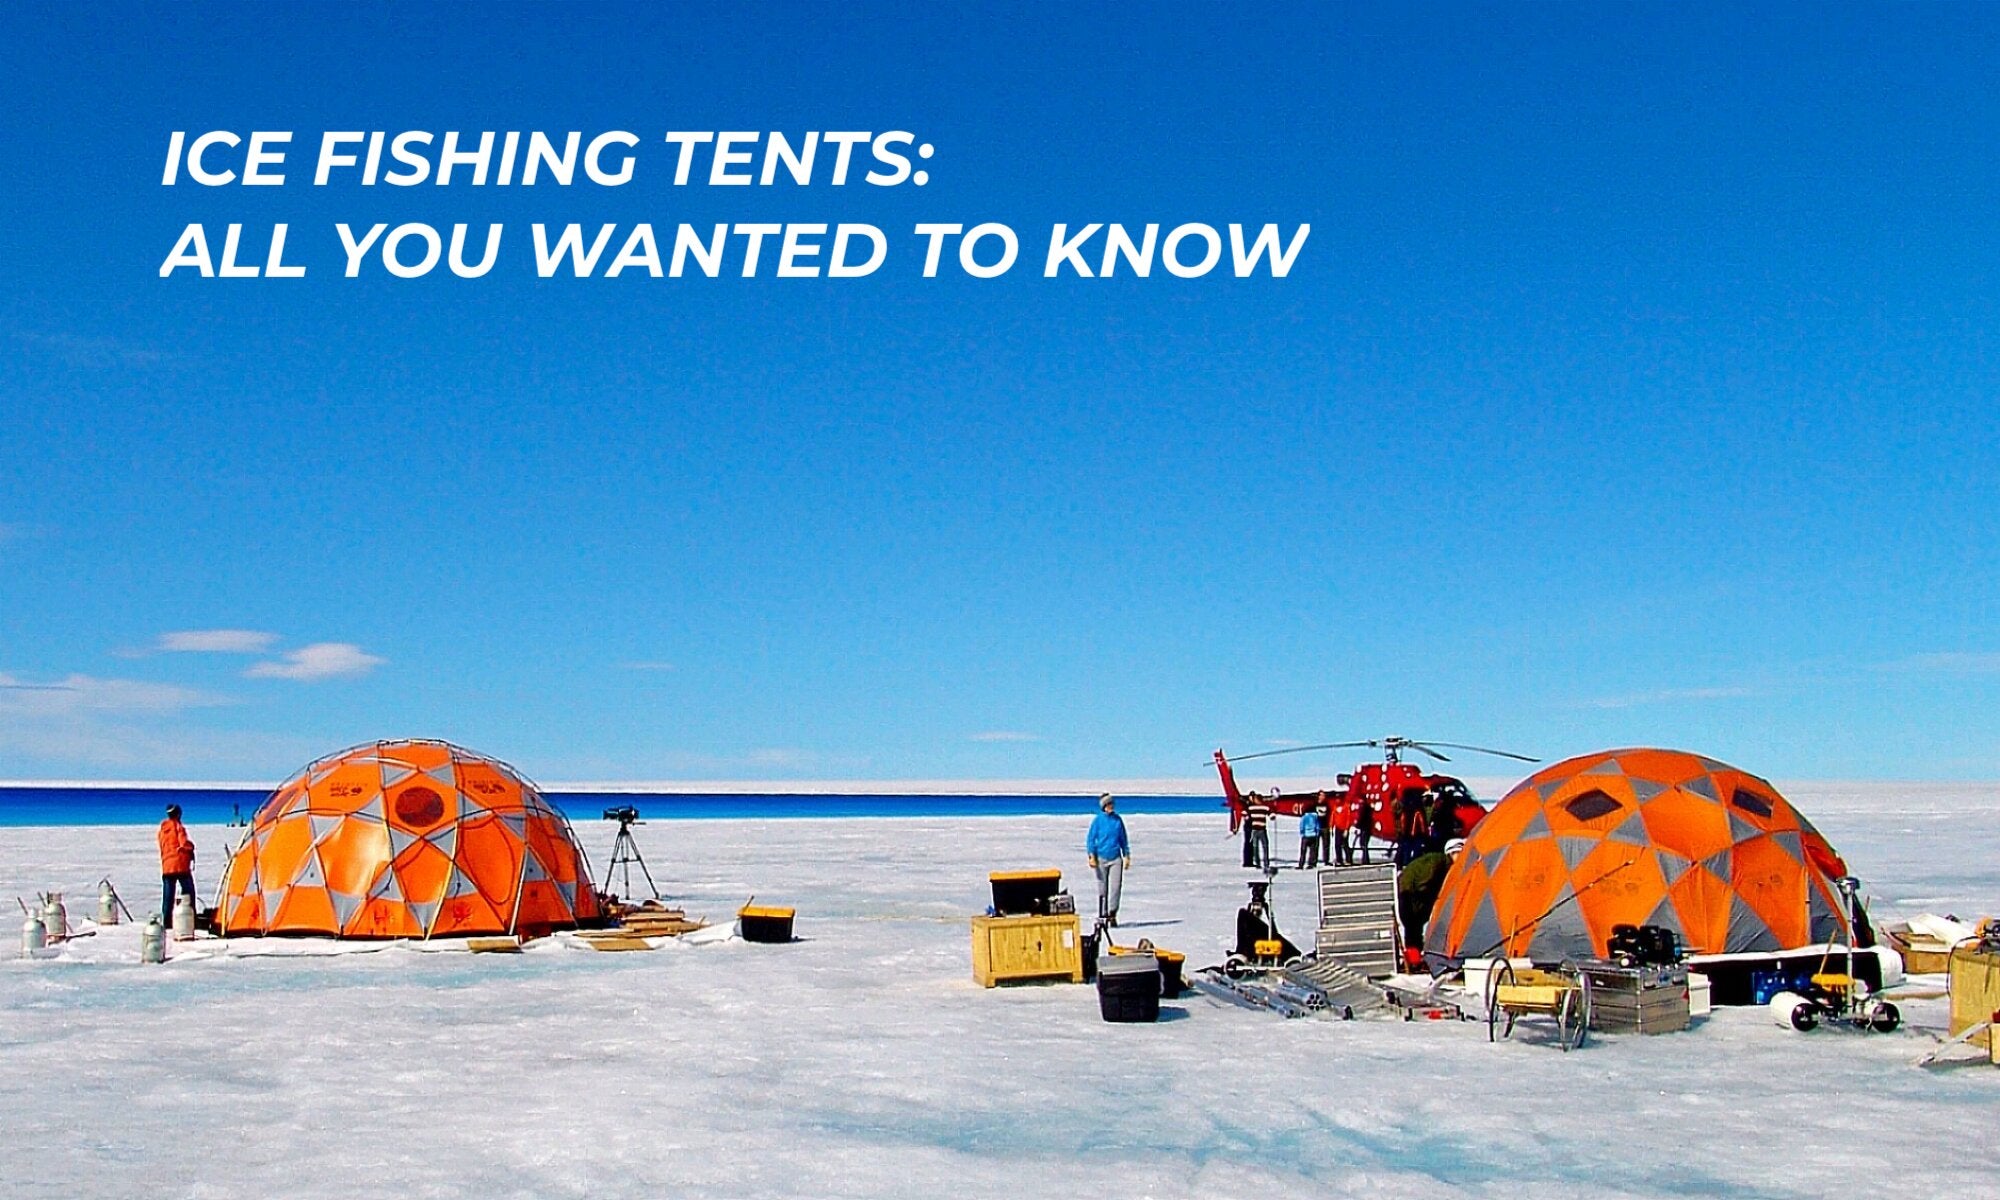 Ice Fishing Tents in Ice Fishing